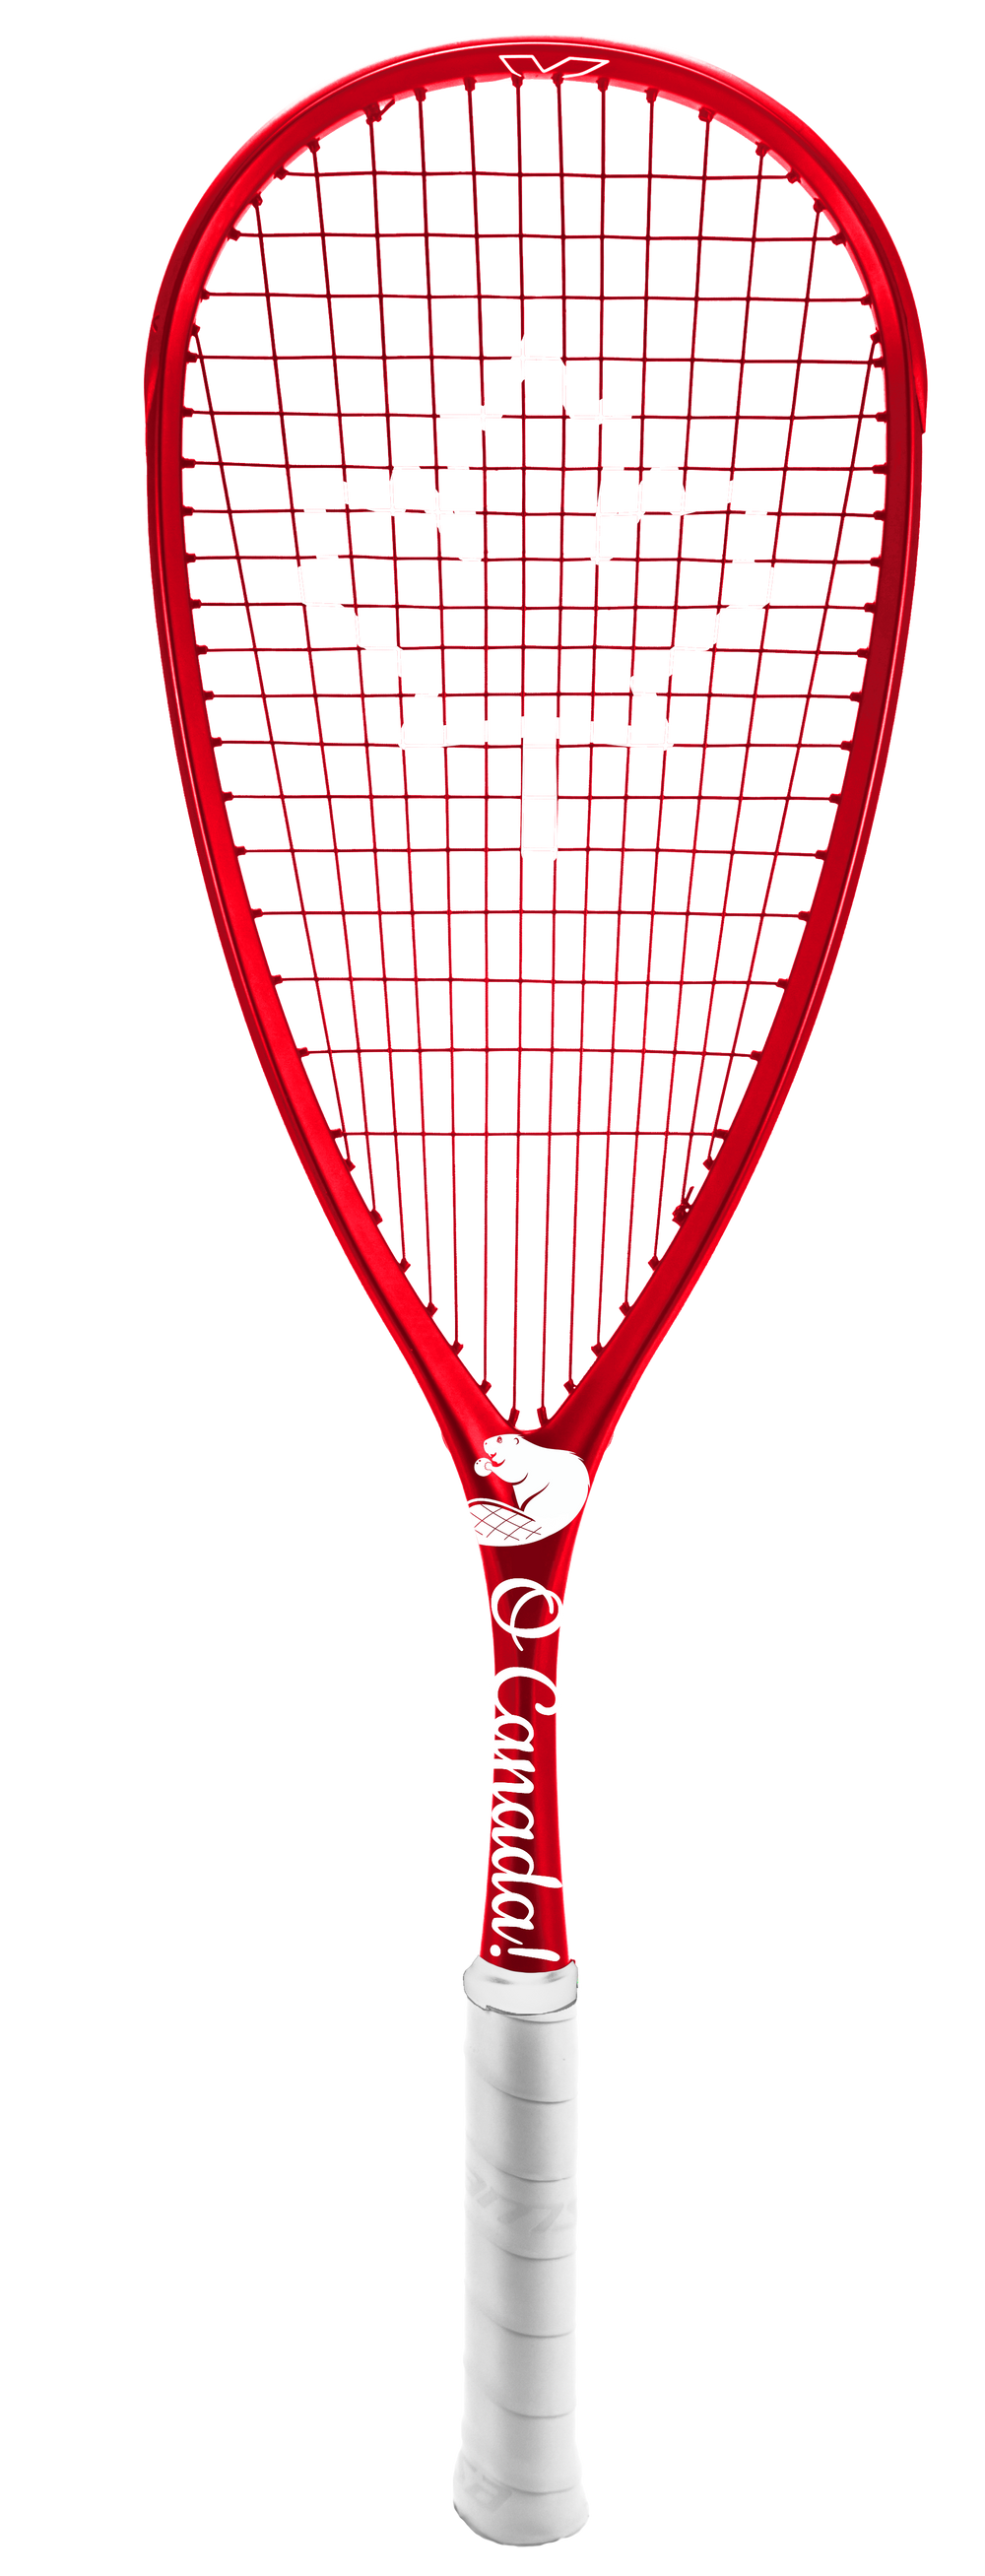 Xamsa Onyx eXposed - O Canada! - Limited Edition Squash Racquet - XamsaSquash